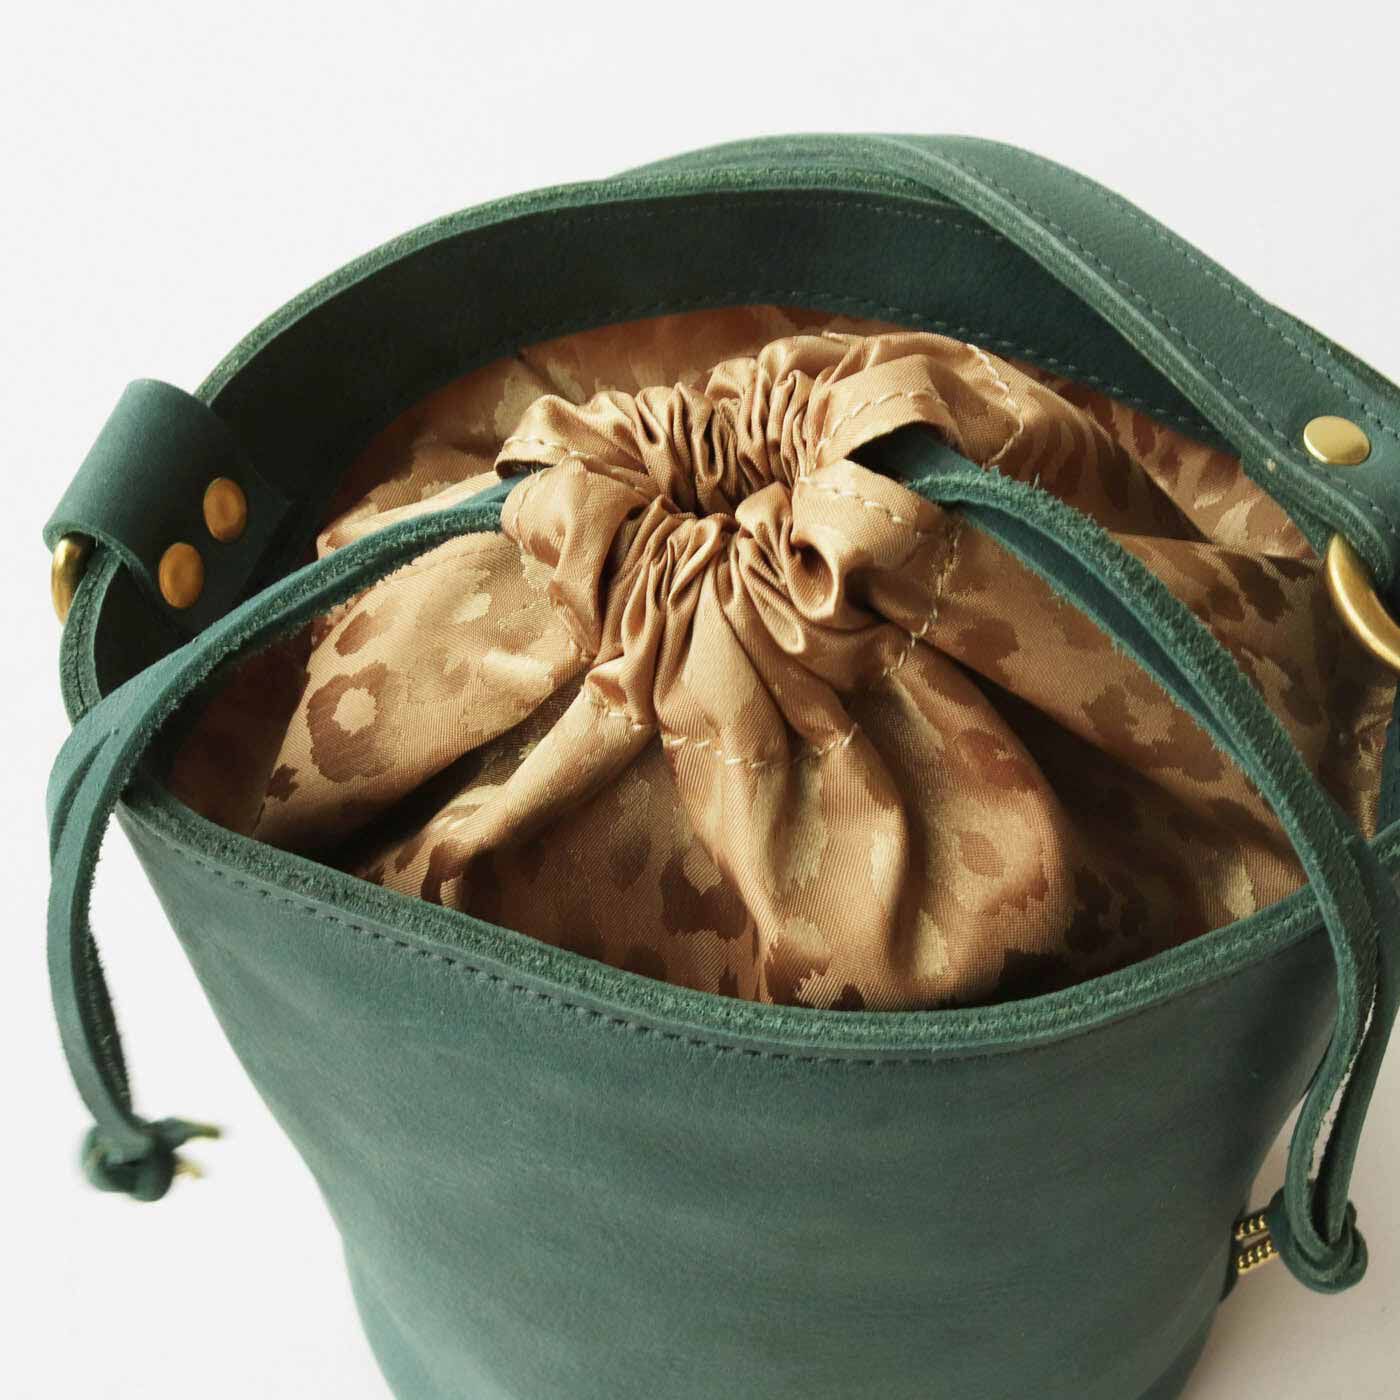 ＆Stories|福岡の鞄作家と作った 職人本革のシトゥルスバッグ〈ターコイズ〉[本革　鞄：日本製]|巾着部分はゴールド色のヒョウ柄生地。大人っぽく都会的な雰囲気。